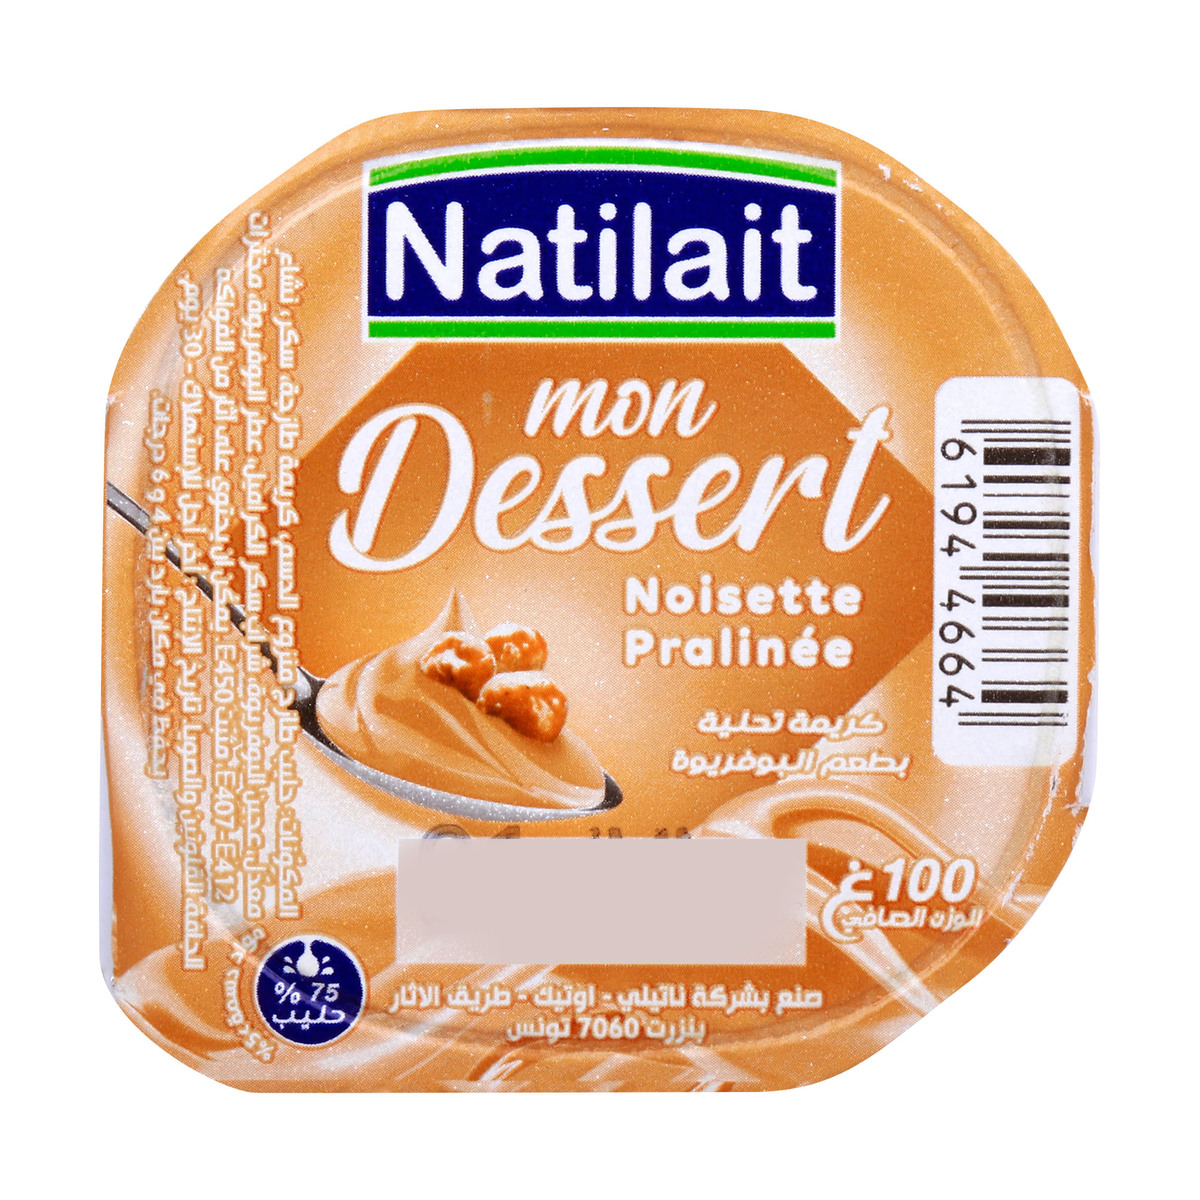 Natilait Hazelnut Mon Dessert 100 g